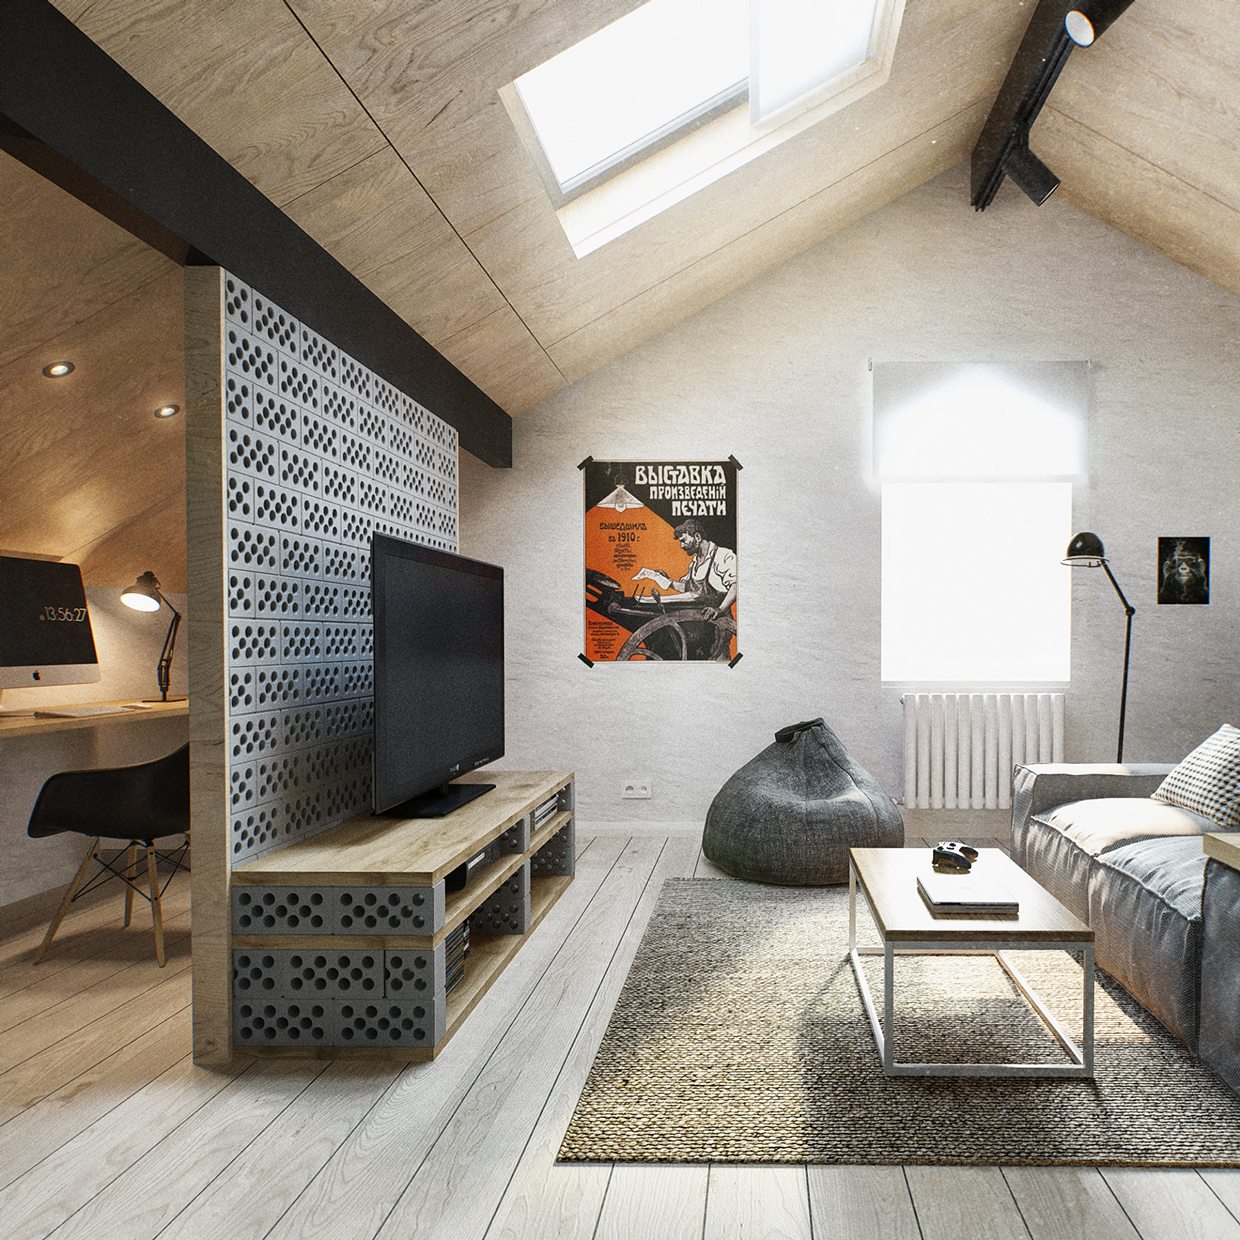 a-duplex-penthouse-designed-with-scandinavian-aesthetics-industrial-elements-includes-floor-plans-19